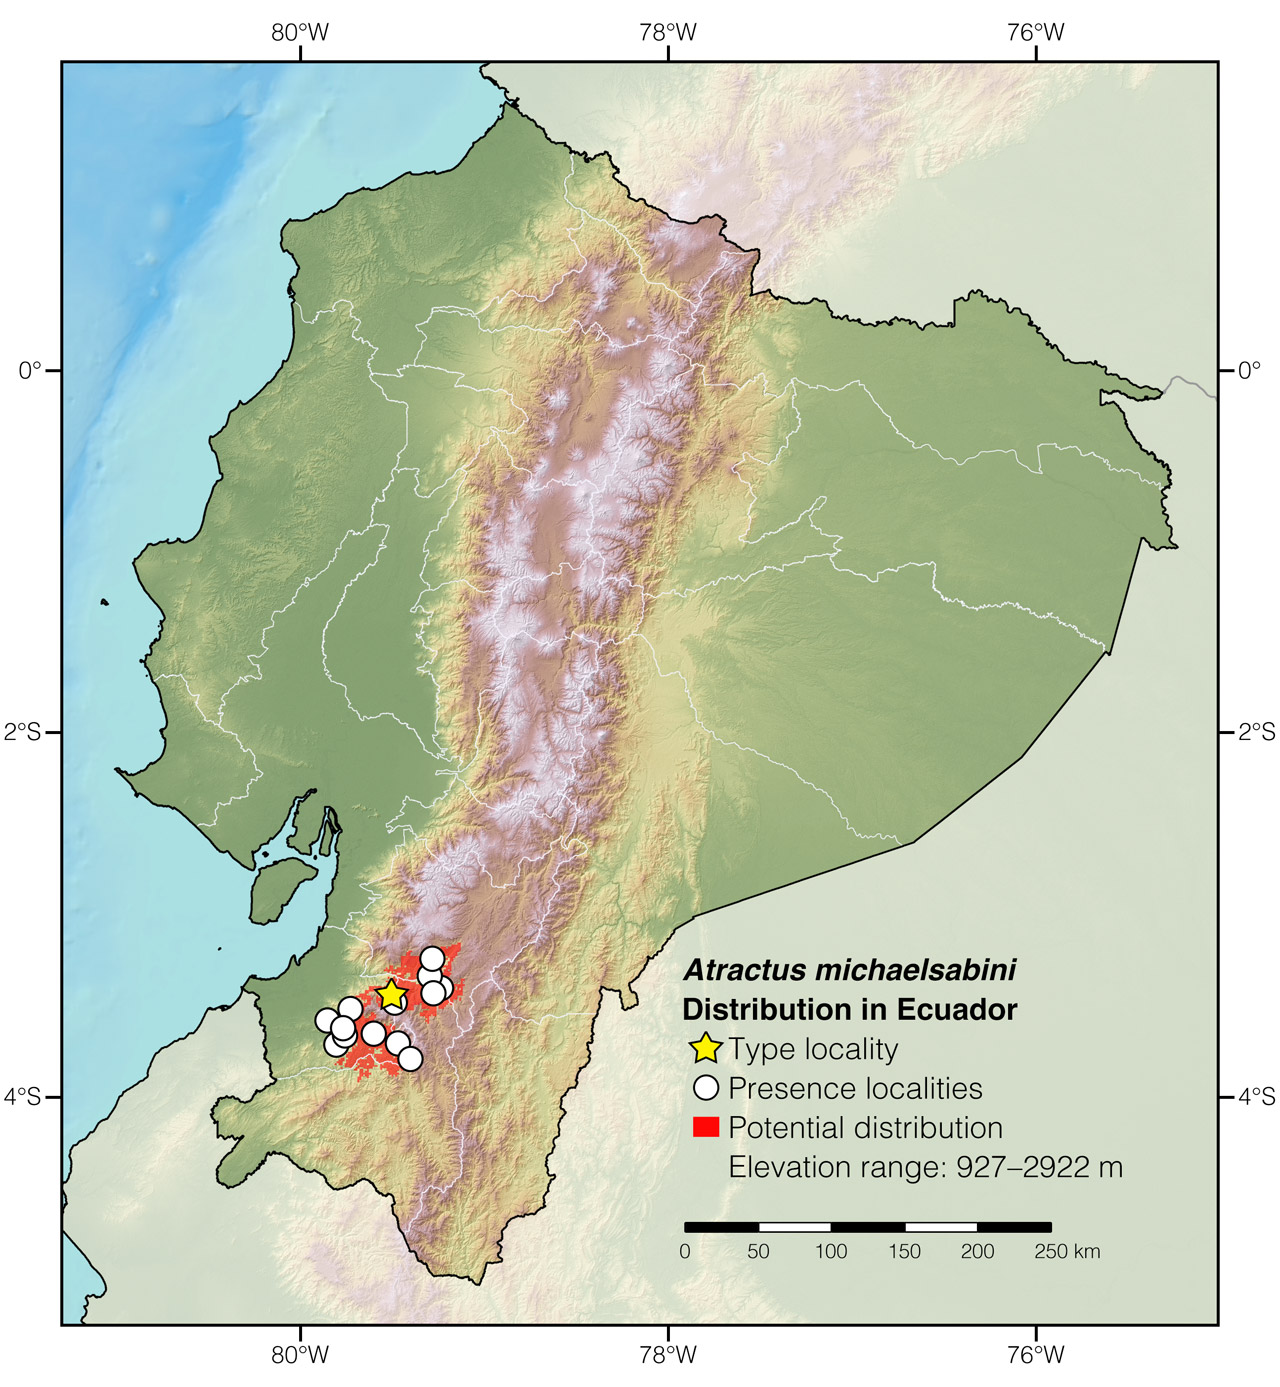 Distribution of Atractus michaelsabini in Ecuador